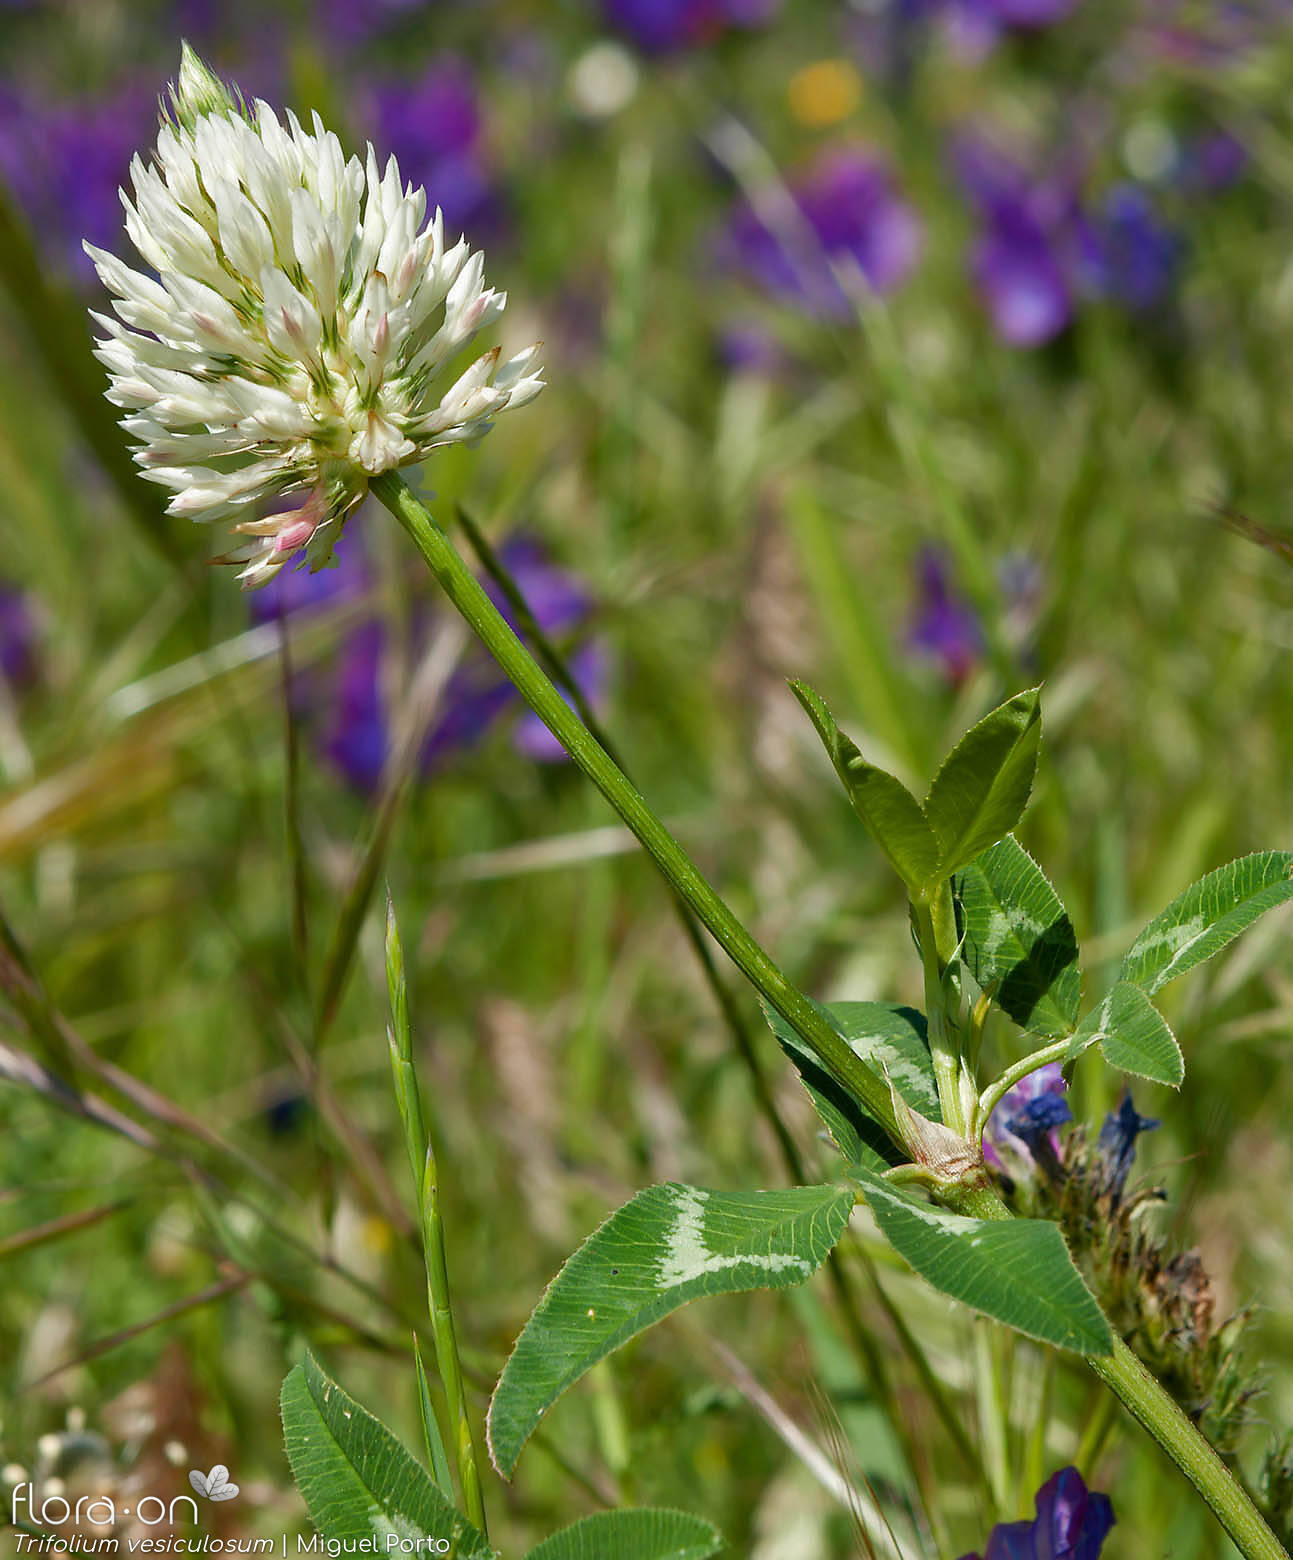 Trifolium vesiculosum - Flor (geral) | Miguel Porto; CC BY-NC 4.0